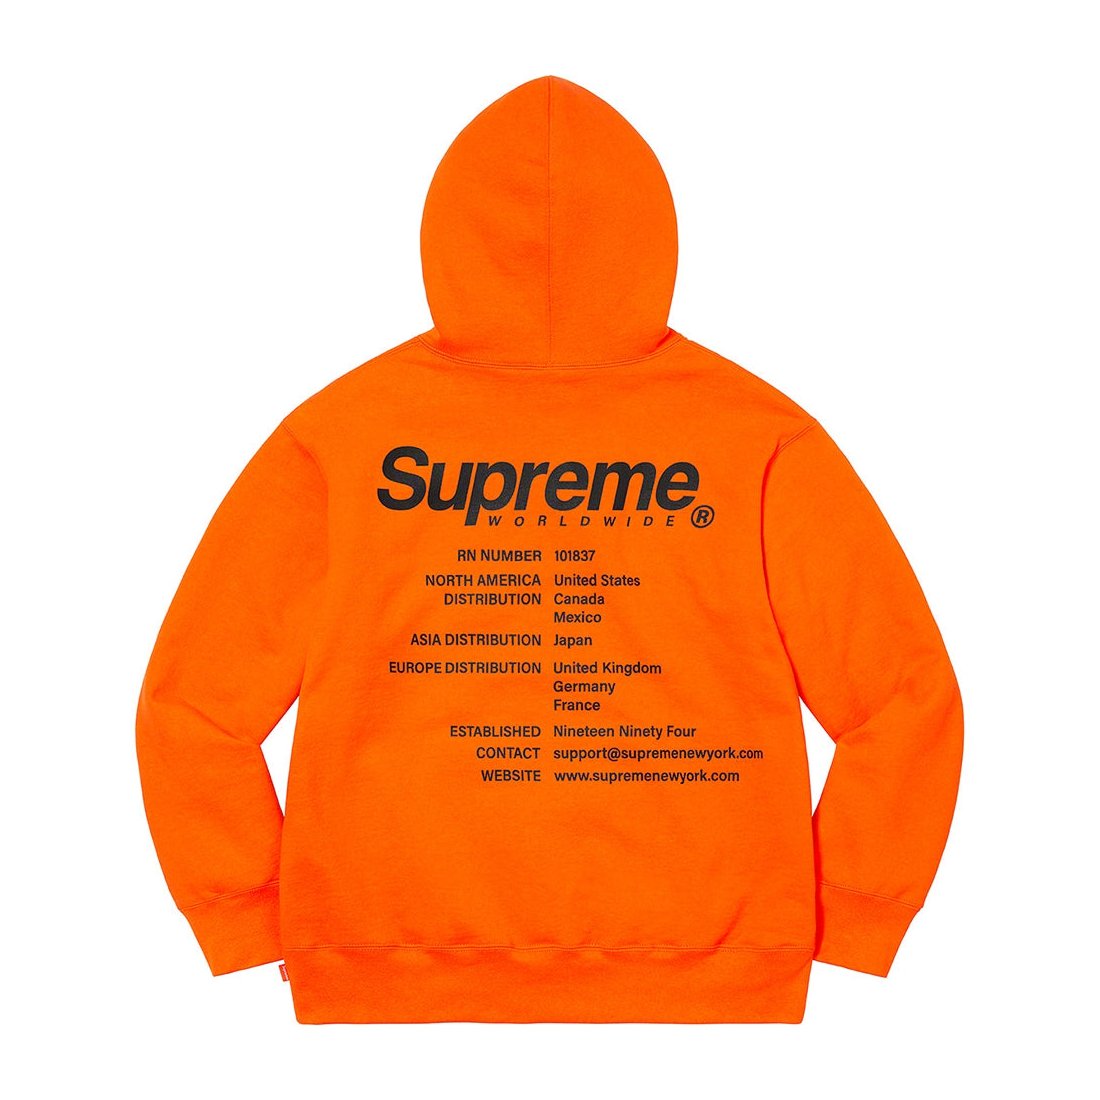 Details on Worldwide Hooded Sweatshirt Dark Orange from spring summer 2023 (Price is $158)